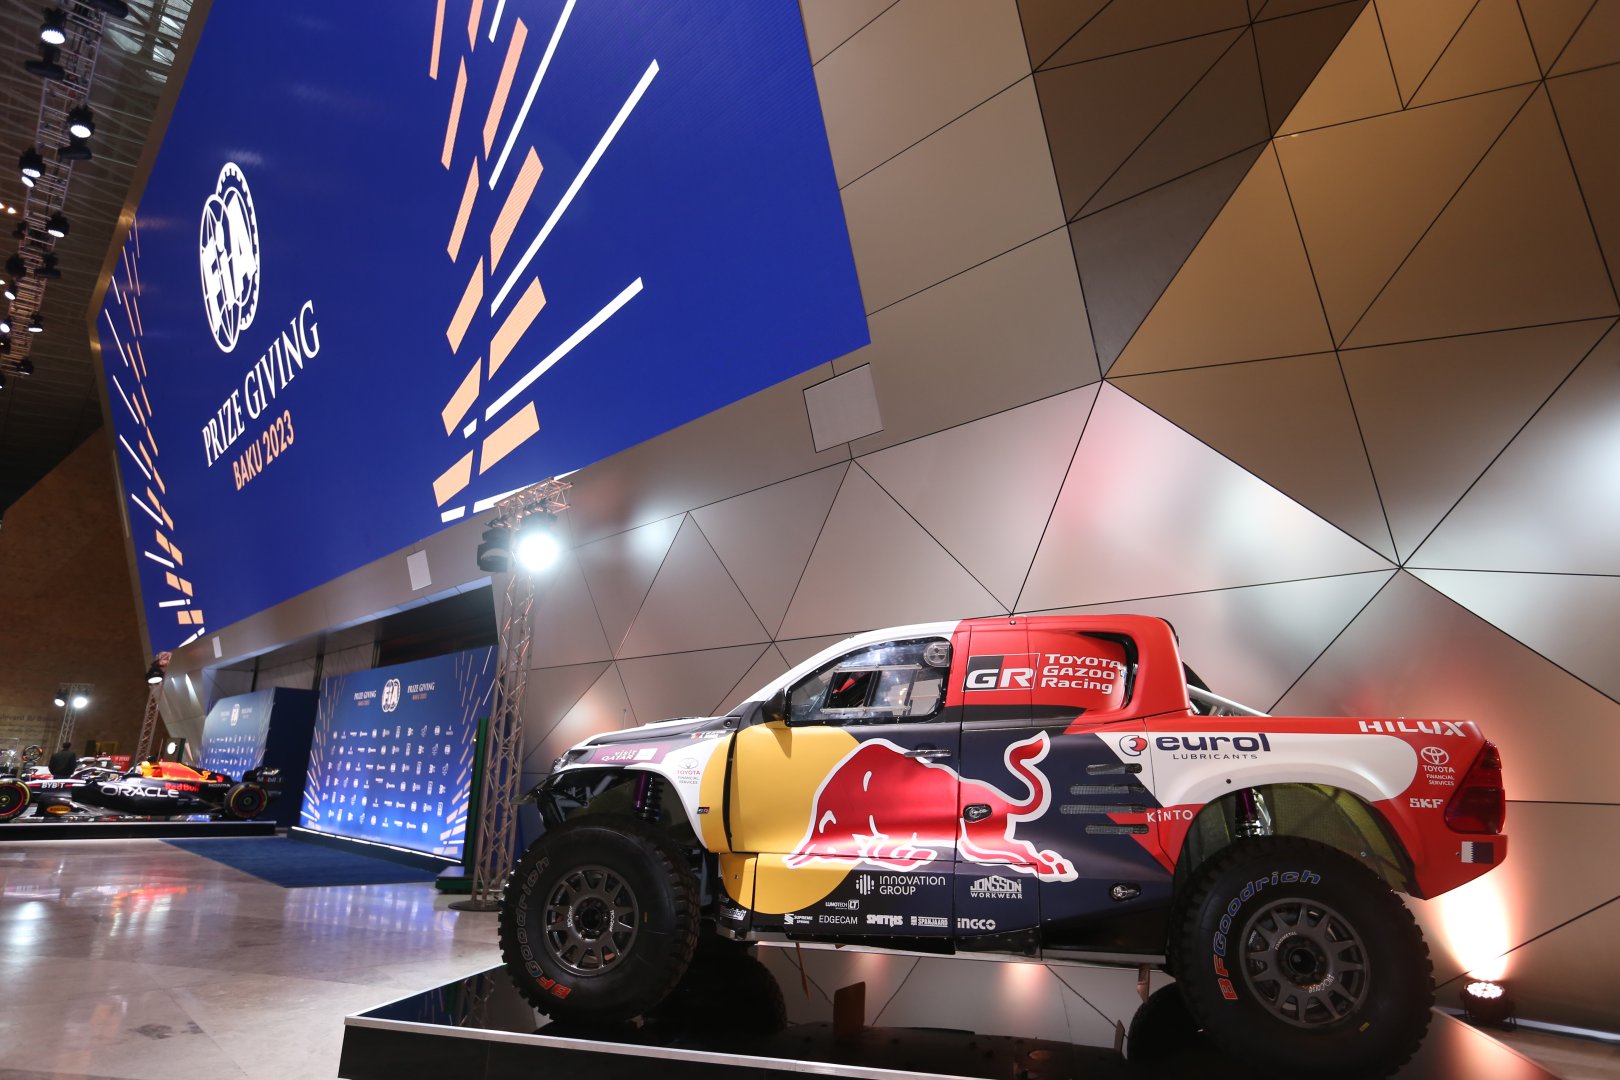 FIA Prize Giving 2023 в Баку запомнилась своей зрелищностью (ФОТО/ВИДЕО)